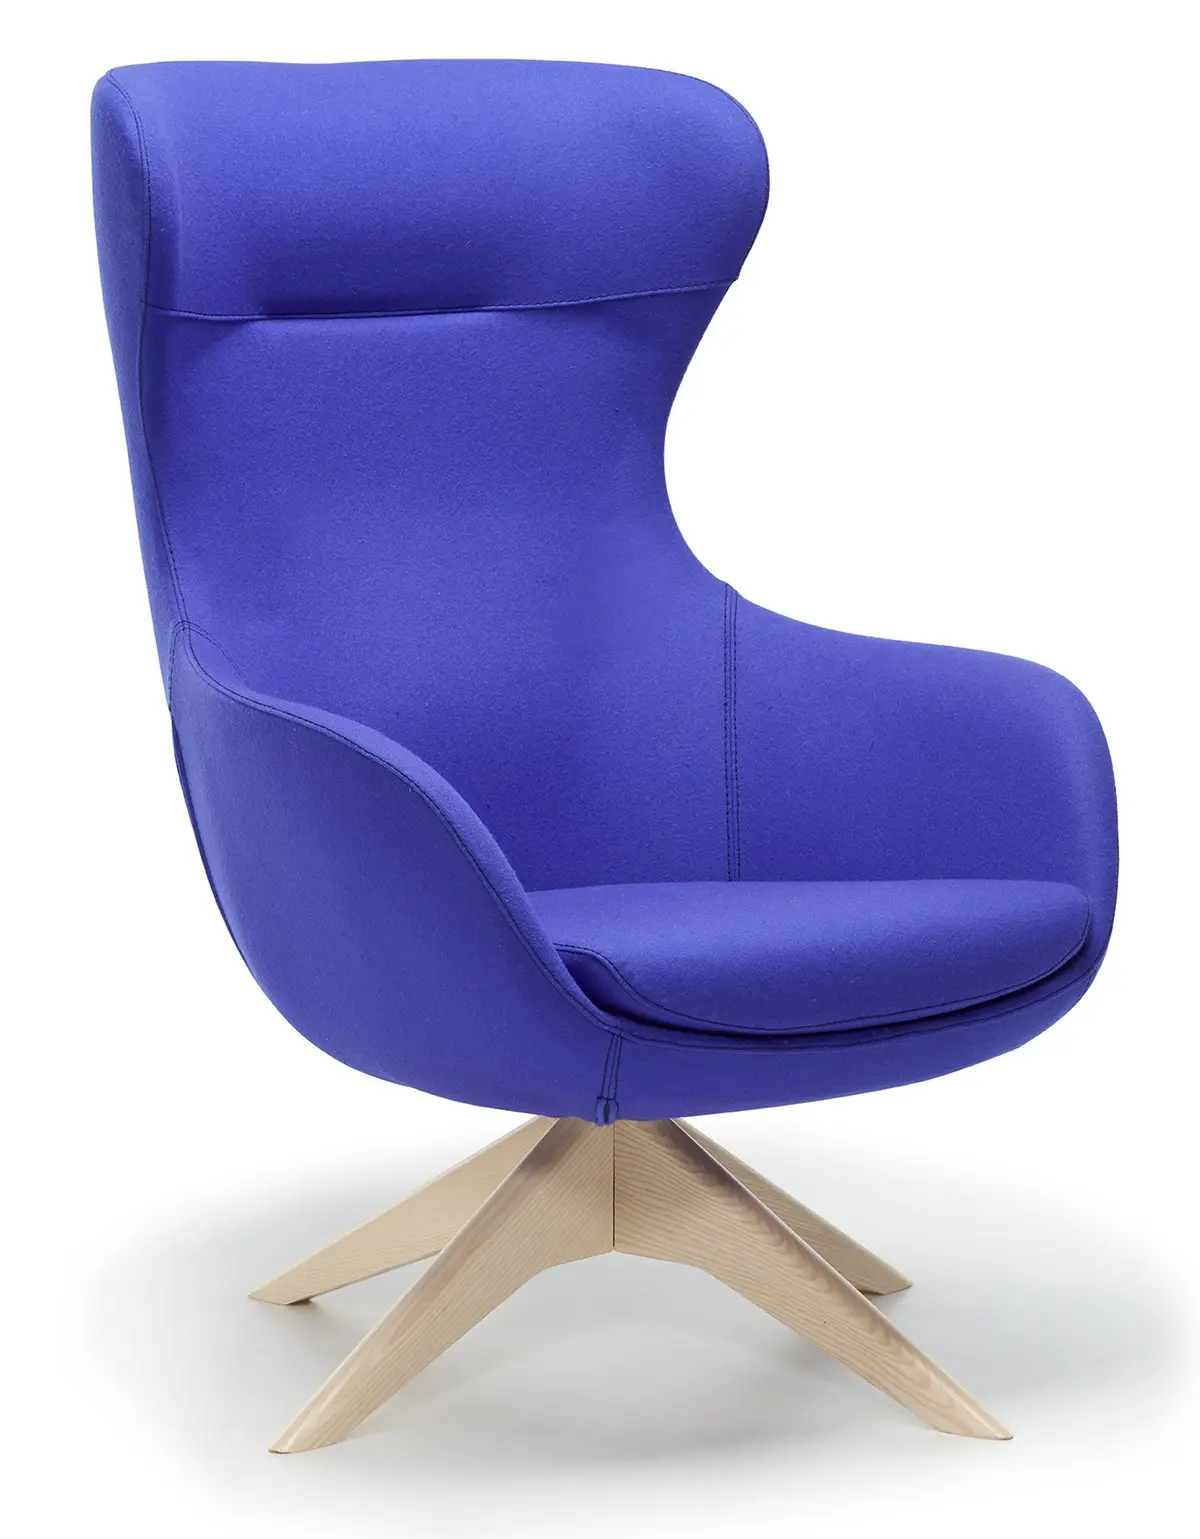 Oasis-sillón giratorio de madera para oficina, silla ergonómica ejecutiva moderna, OEM, tela de Kasha púrpura